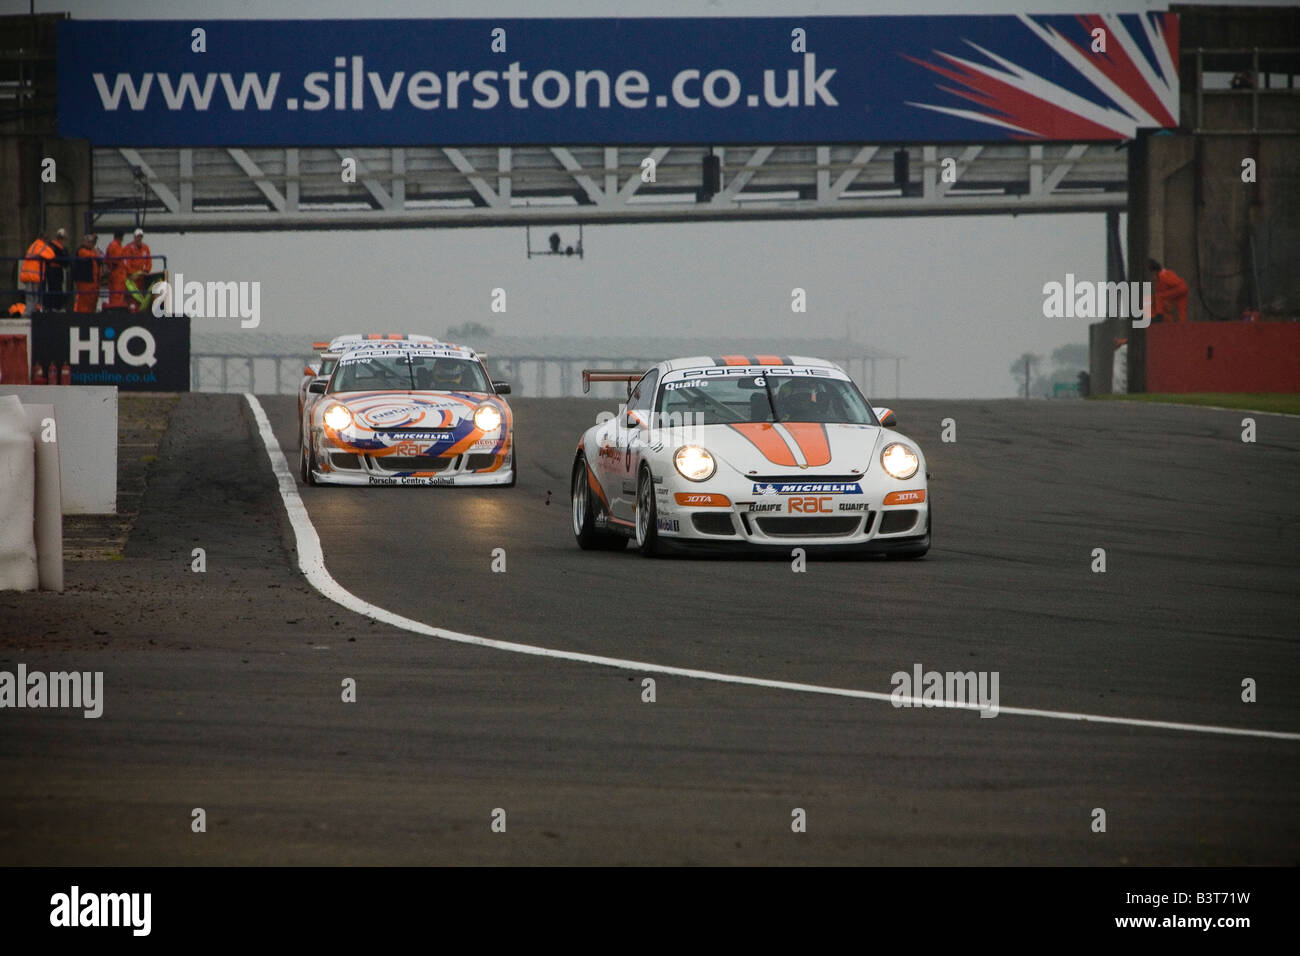 Silverstone Carrera Cup Sean-Paul Breslin Stockfoto